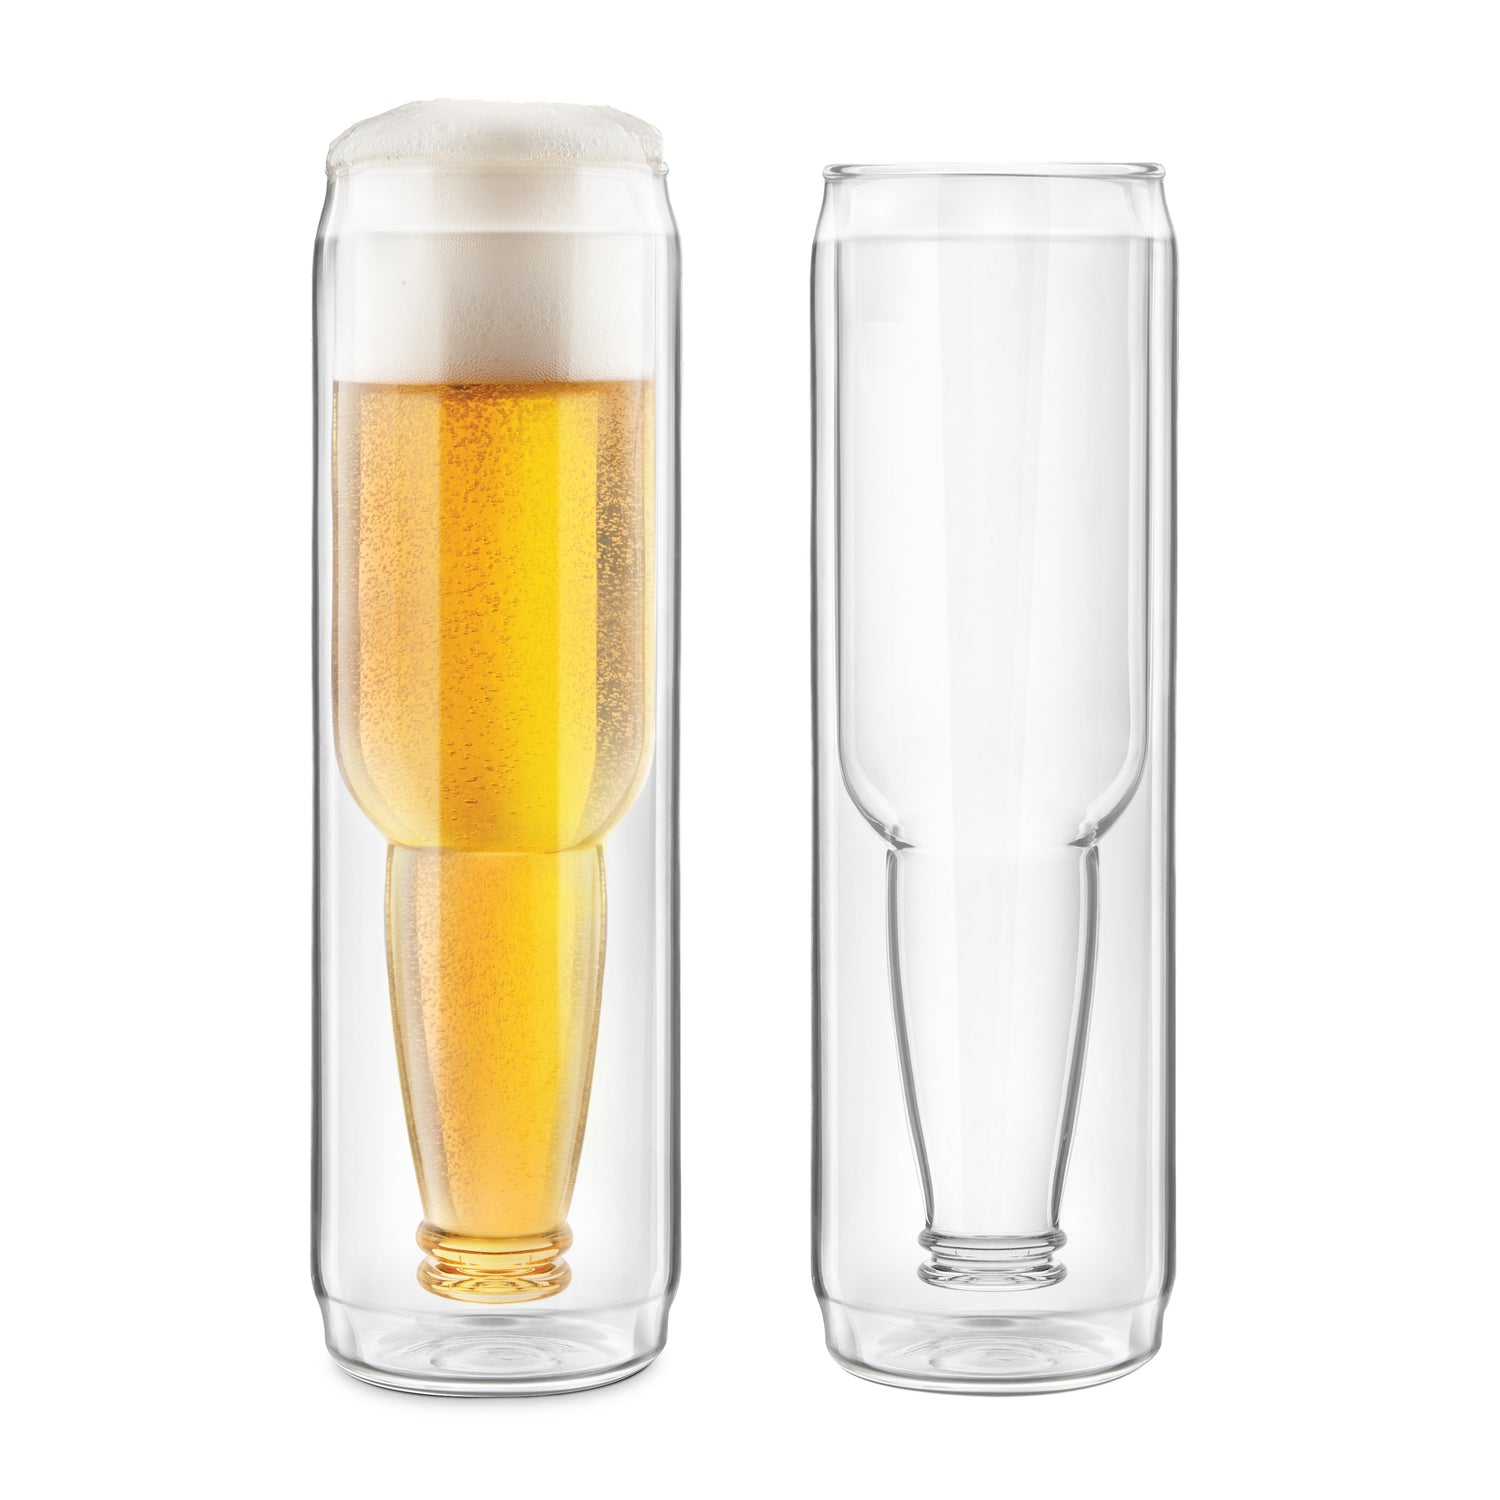 Bottoms Up Beer Glasses